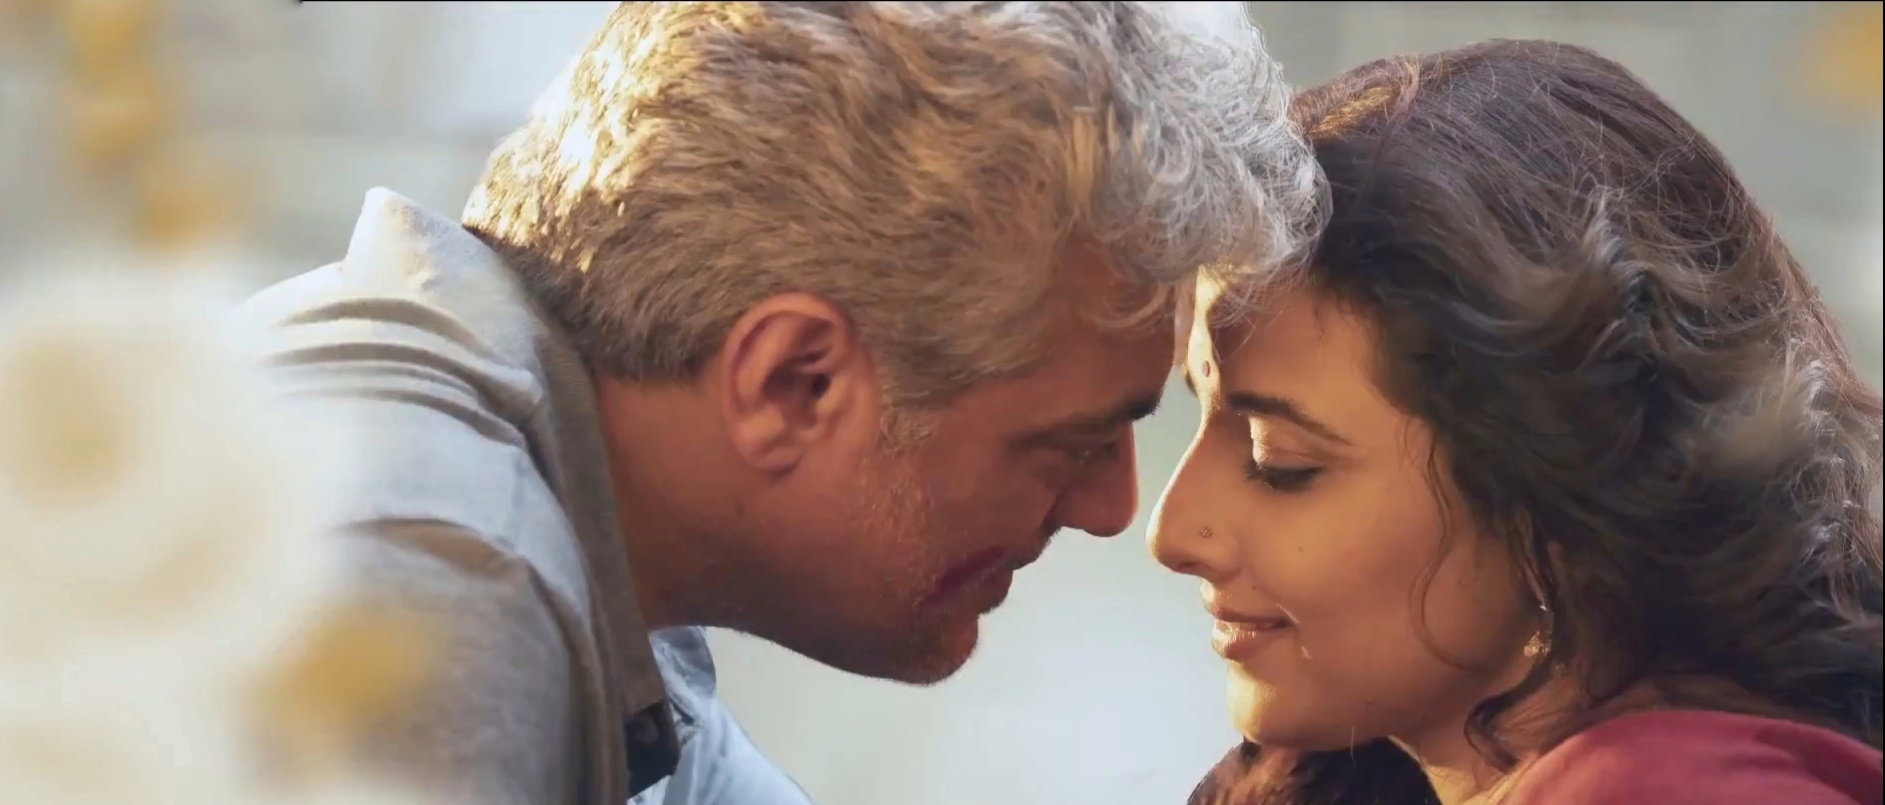 Thala Ajith And Vidya Balan Romantic Stills From Nerkonda Paarvai Set 1